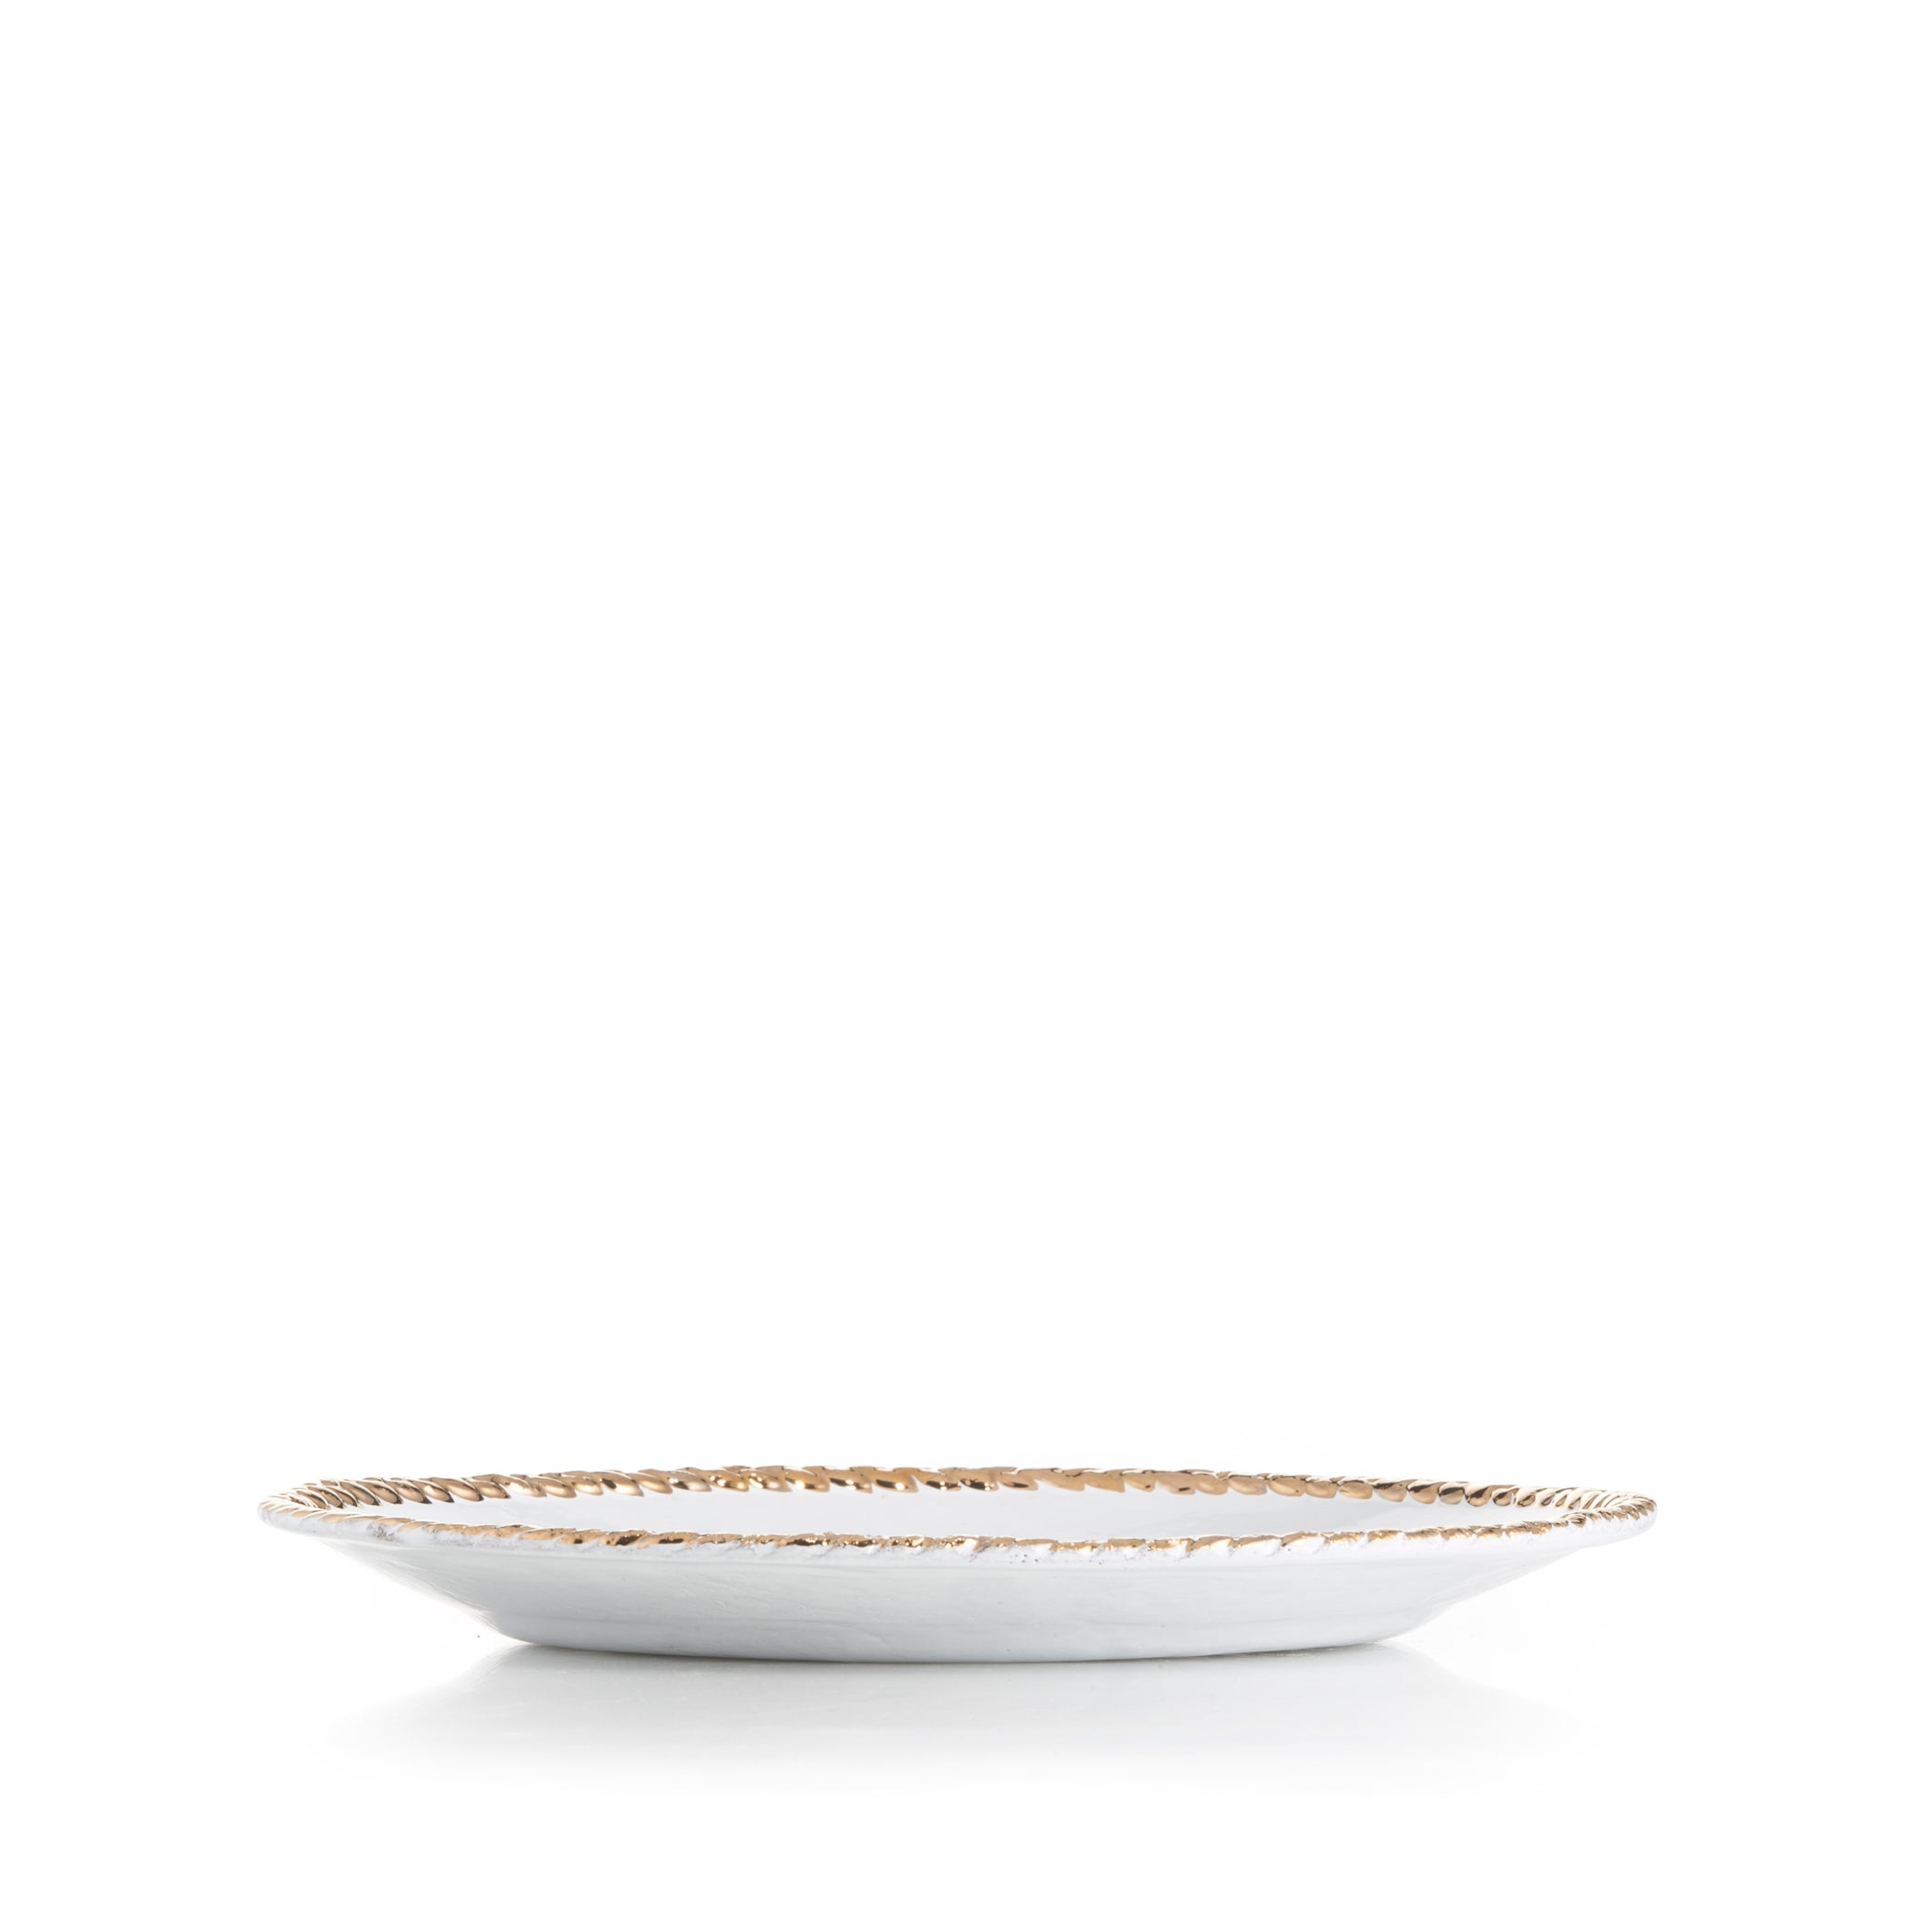 Joséphine Dinner Plate with Gold Rim by Astier de Villatte, 26.5cm